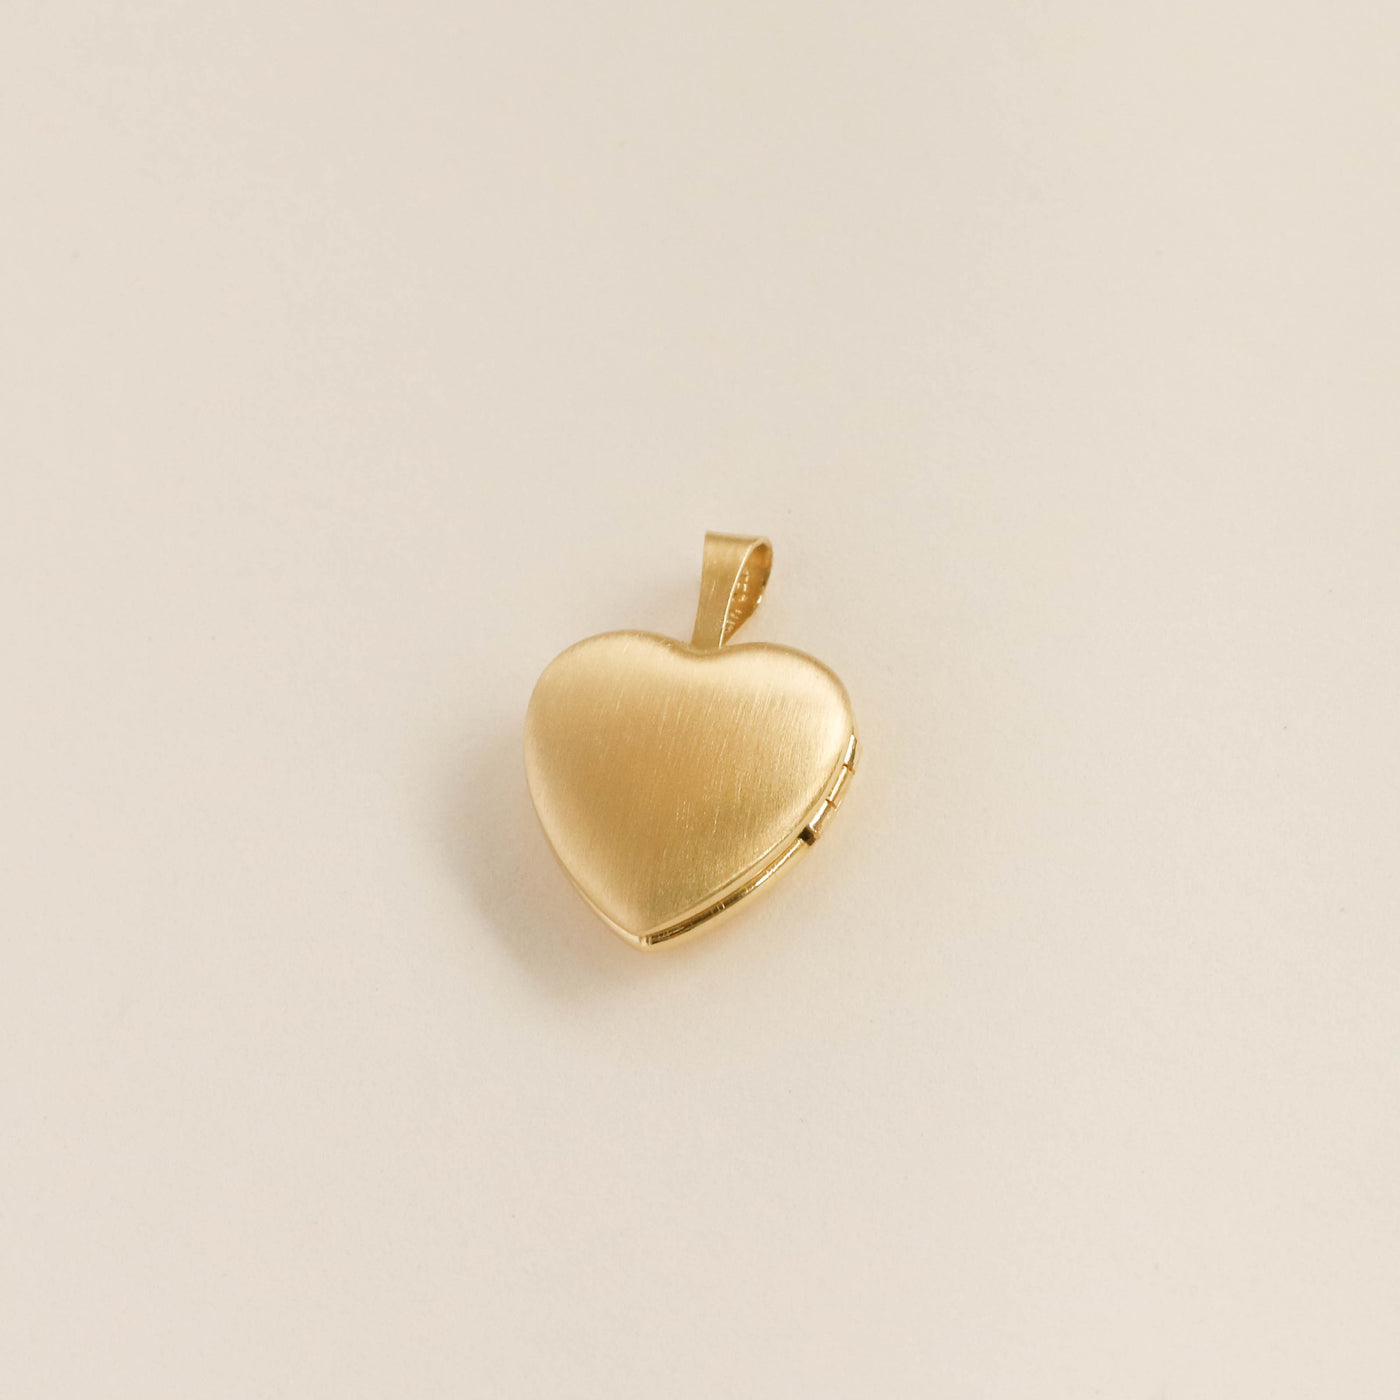 Gold heart pendant locket